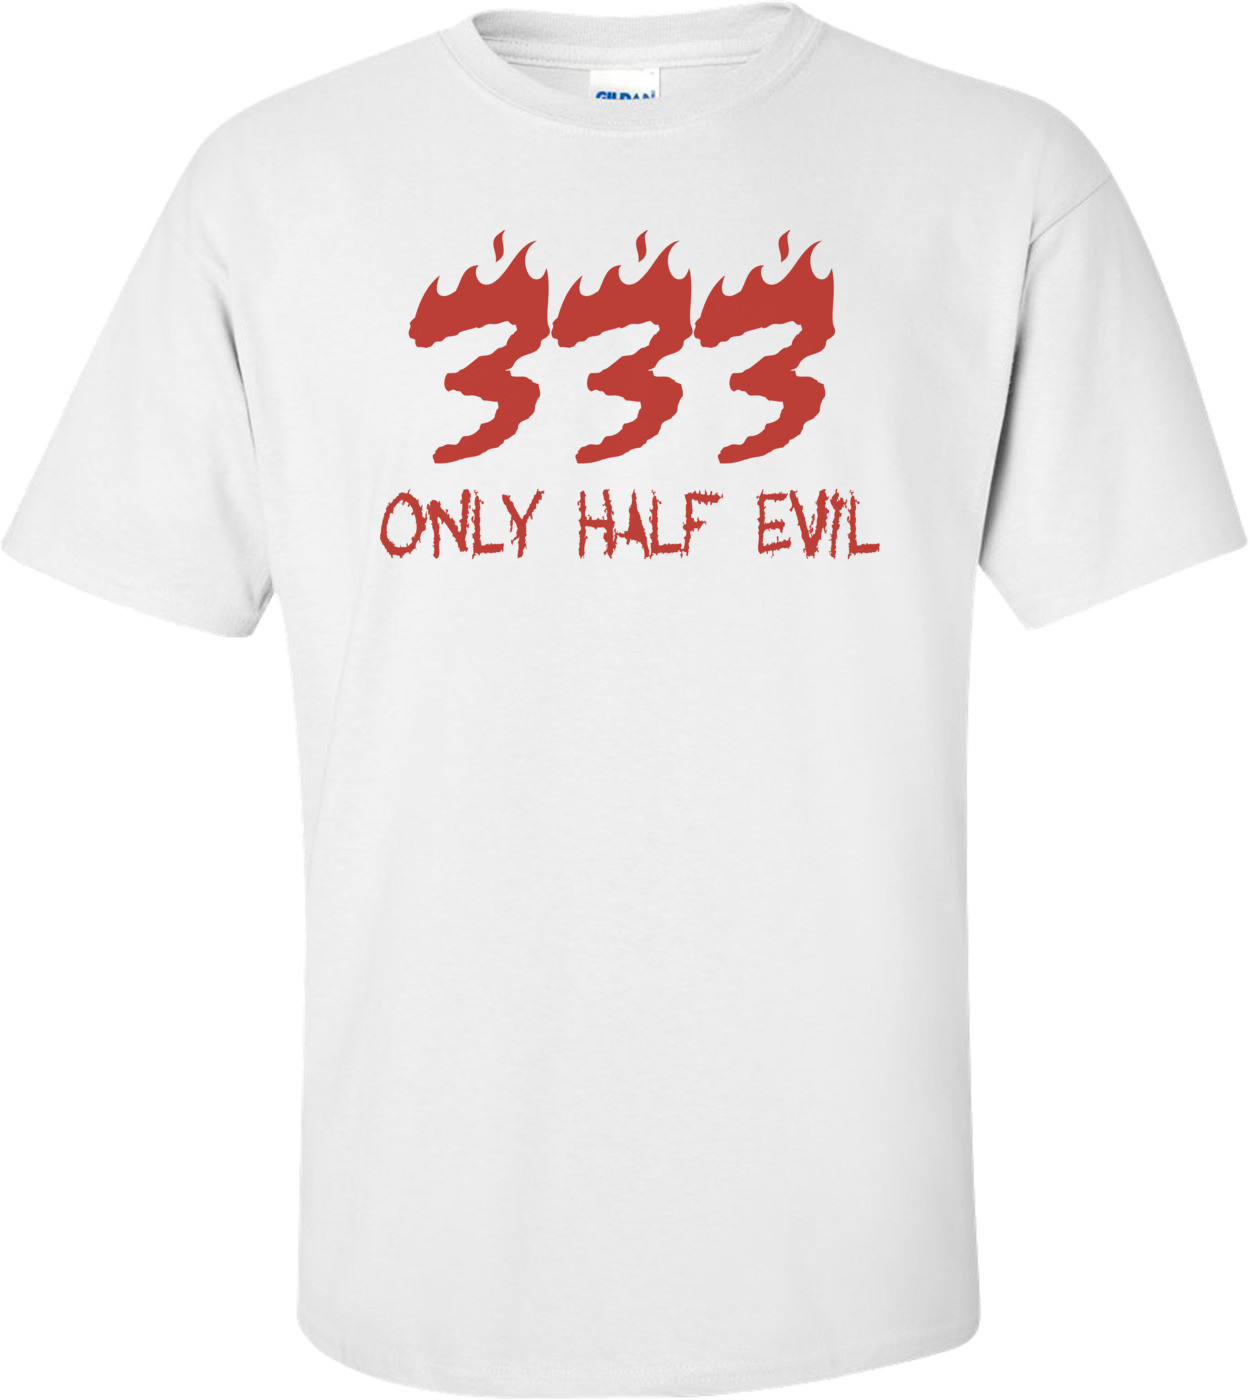 333 Only Half Evil - Kid's T-shirt